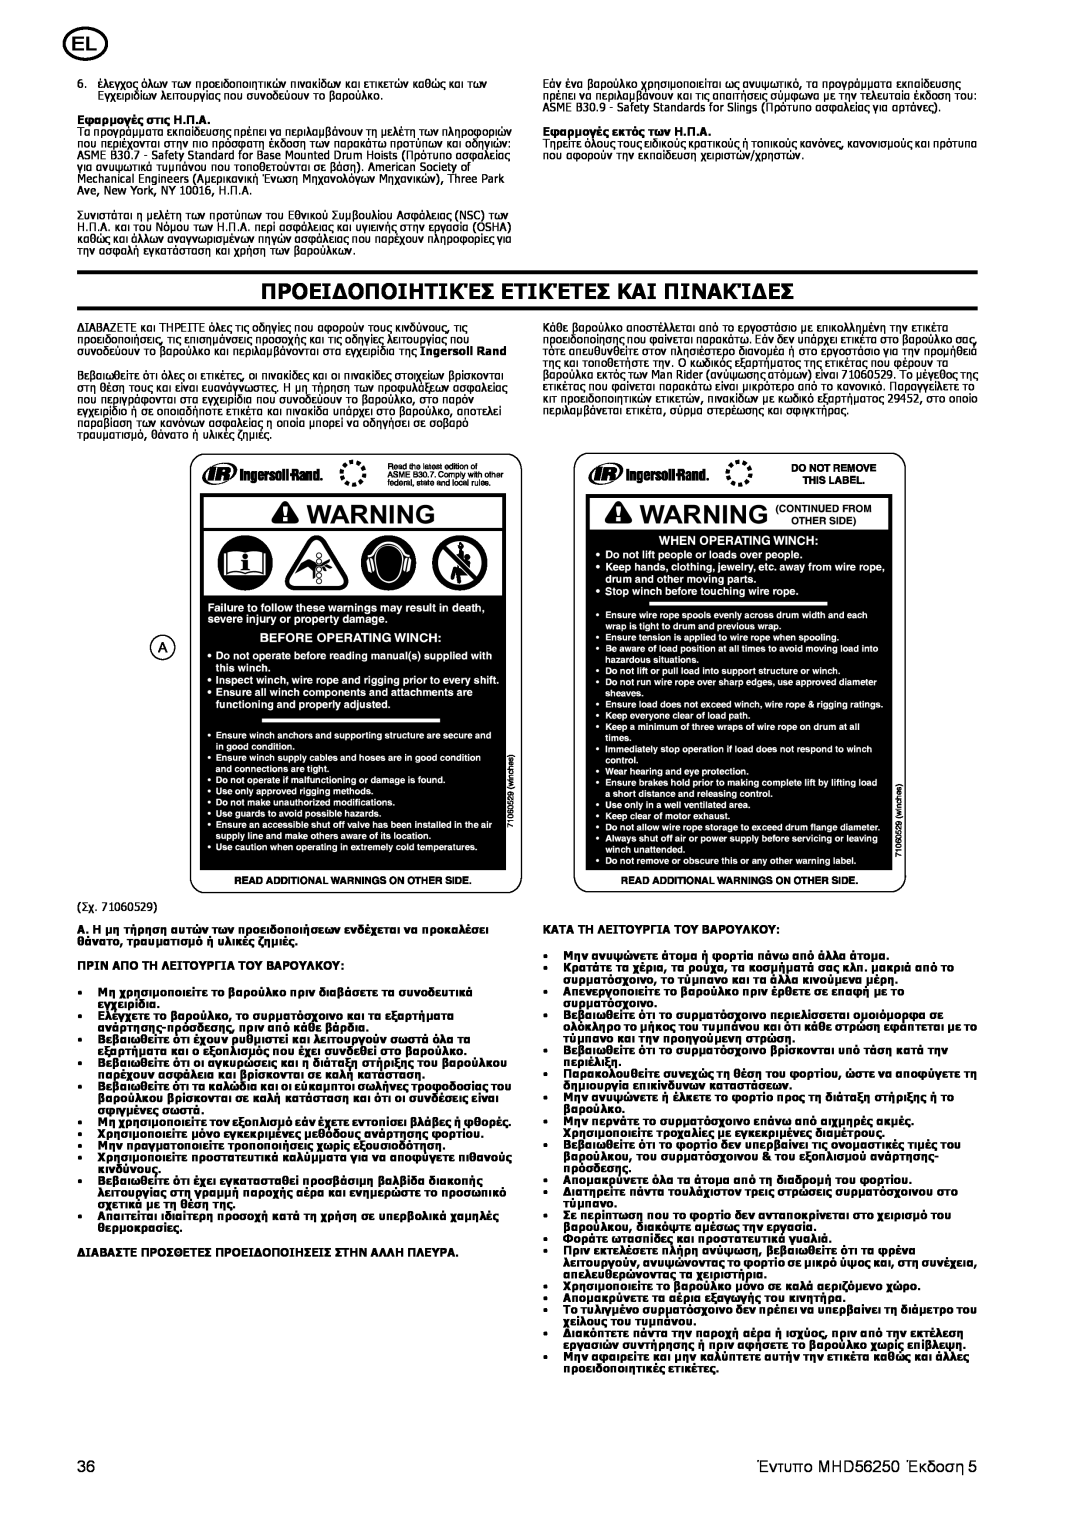 Ingersoll-Rand MHD56250 manual Προειδοποιητικέσ Ετικέτεσ Και Πινακίδεσ 